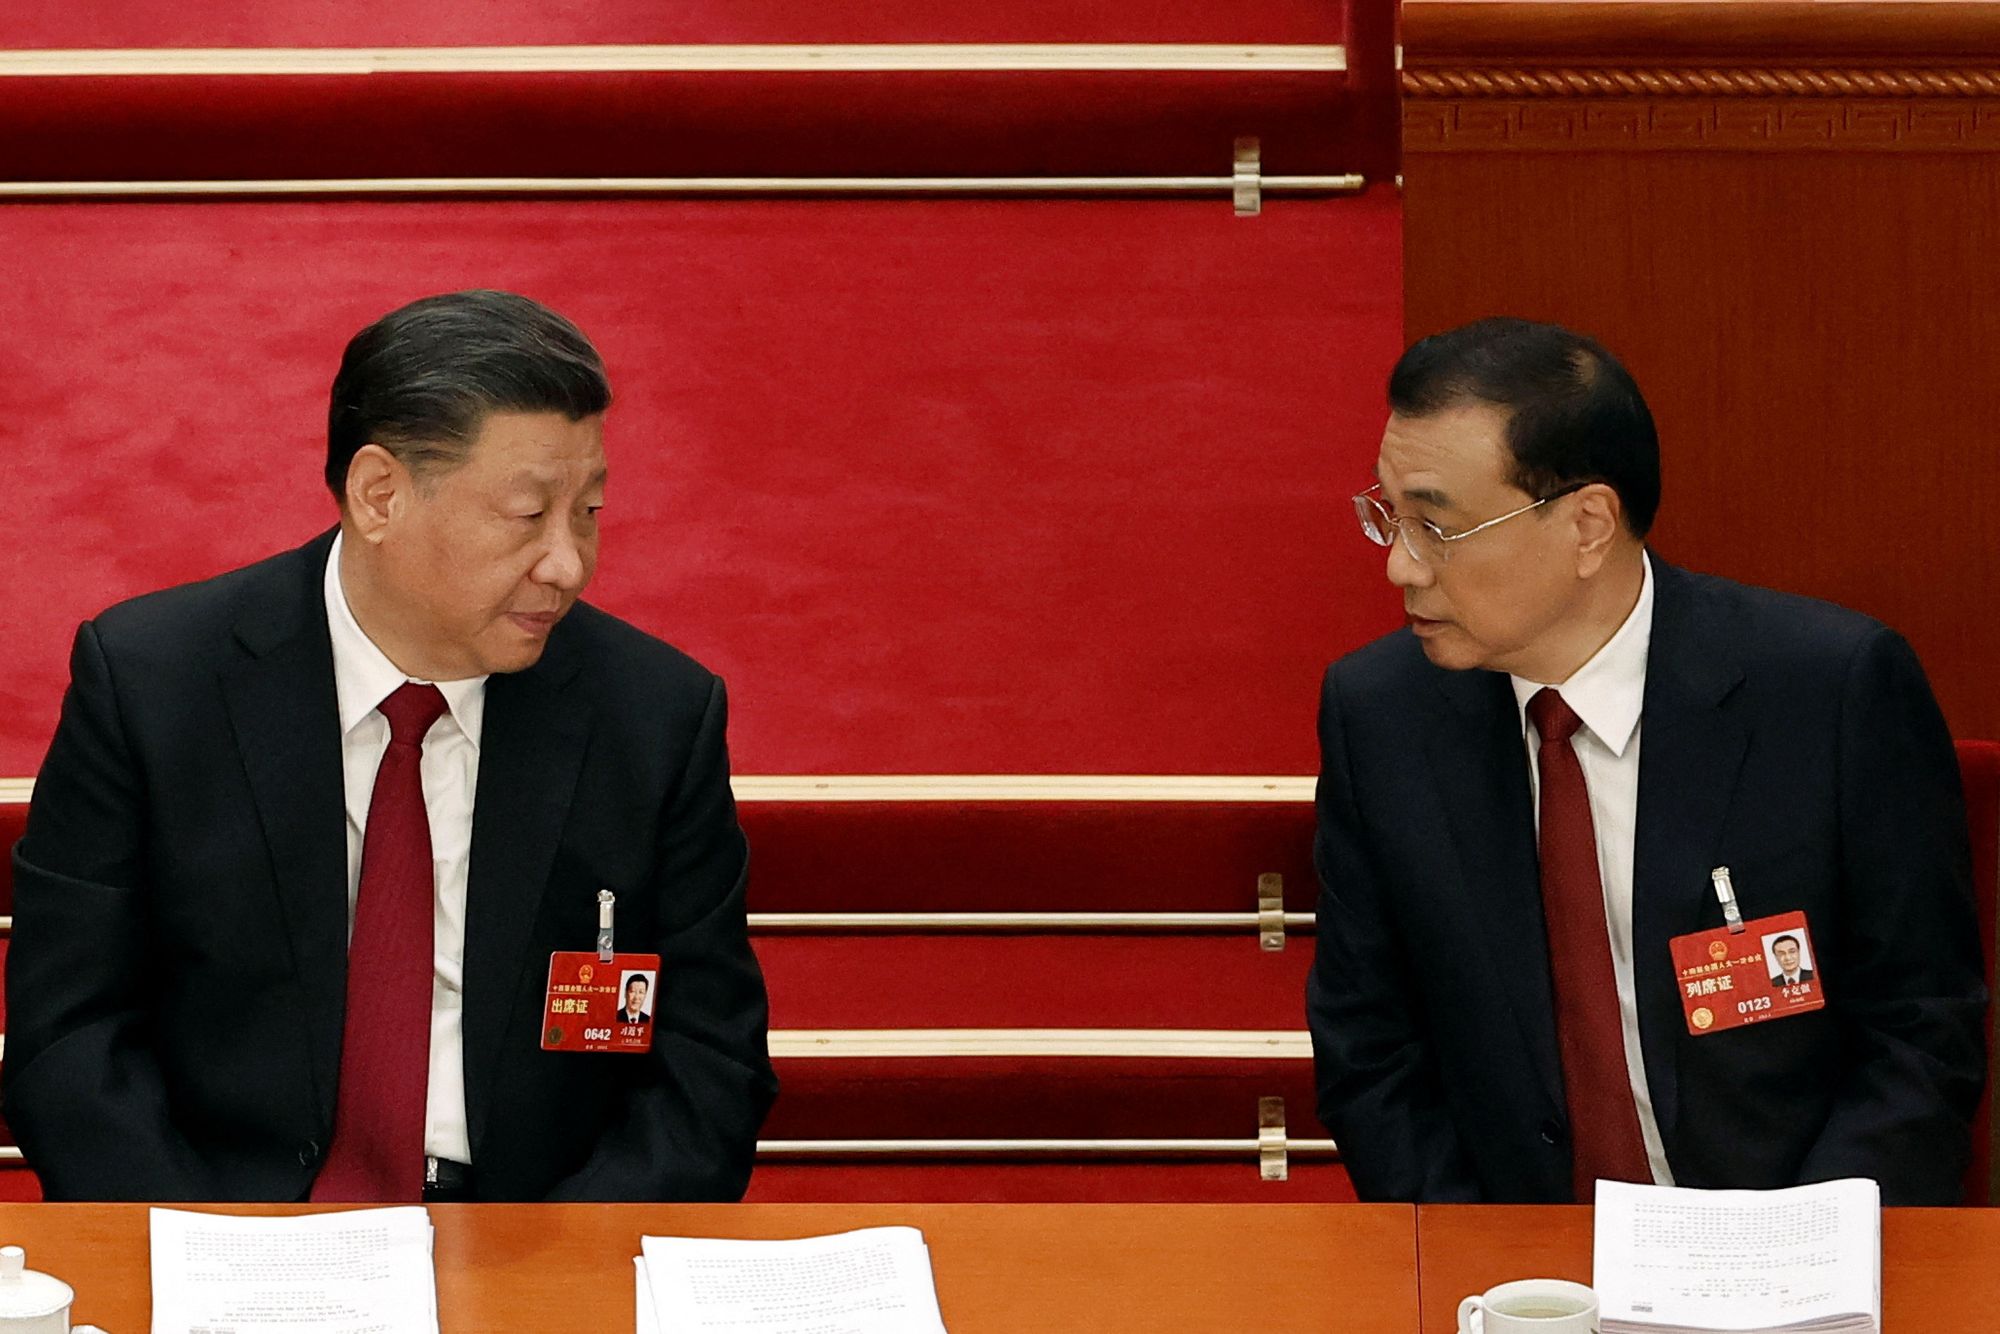 Chinese President Xi Jinping and Premier Li Keqiang